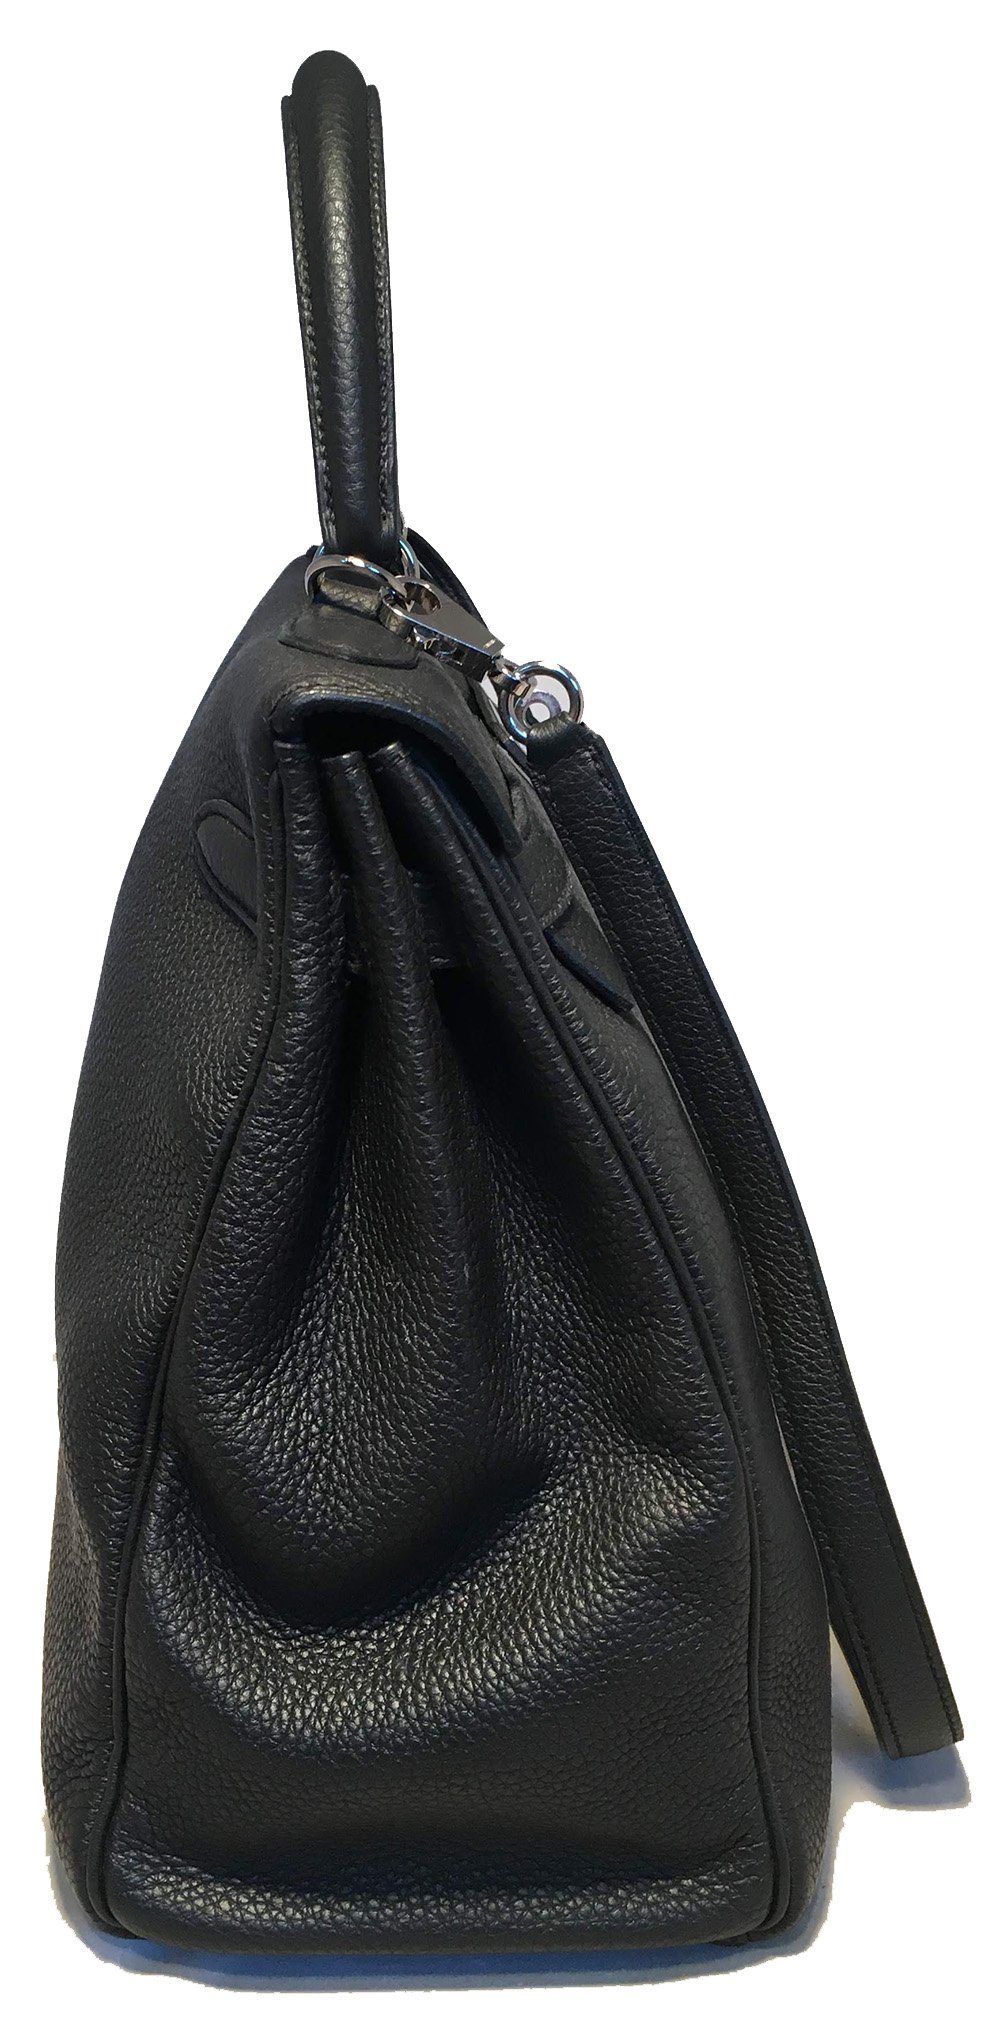 Image of Hermes Black Togo Leather 35 cm Kelly Bag with Strap